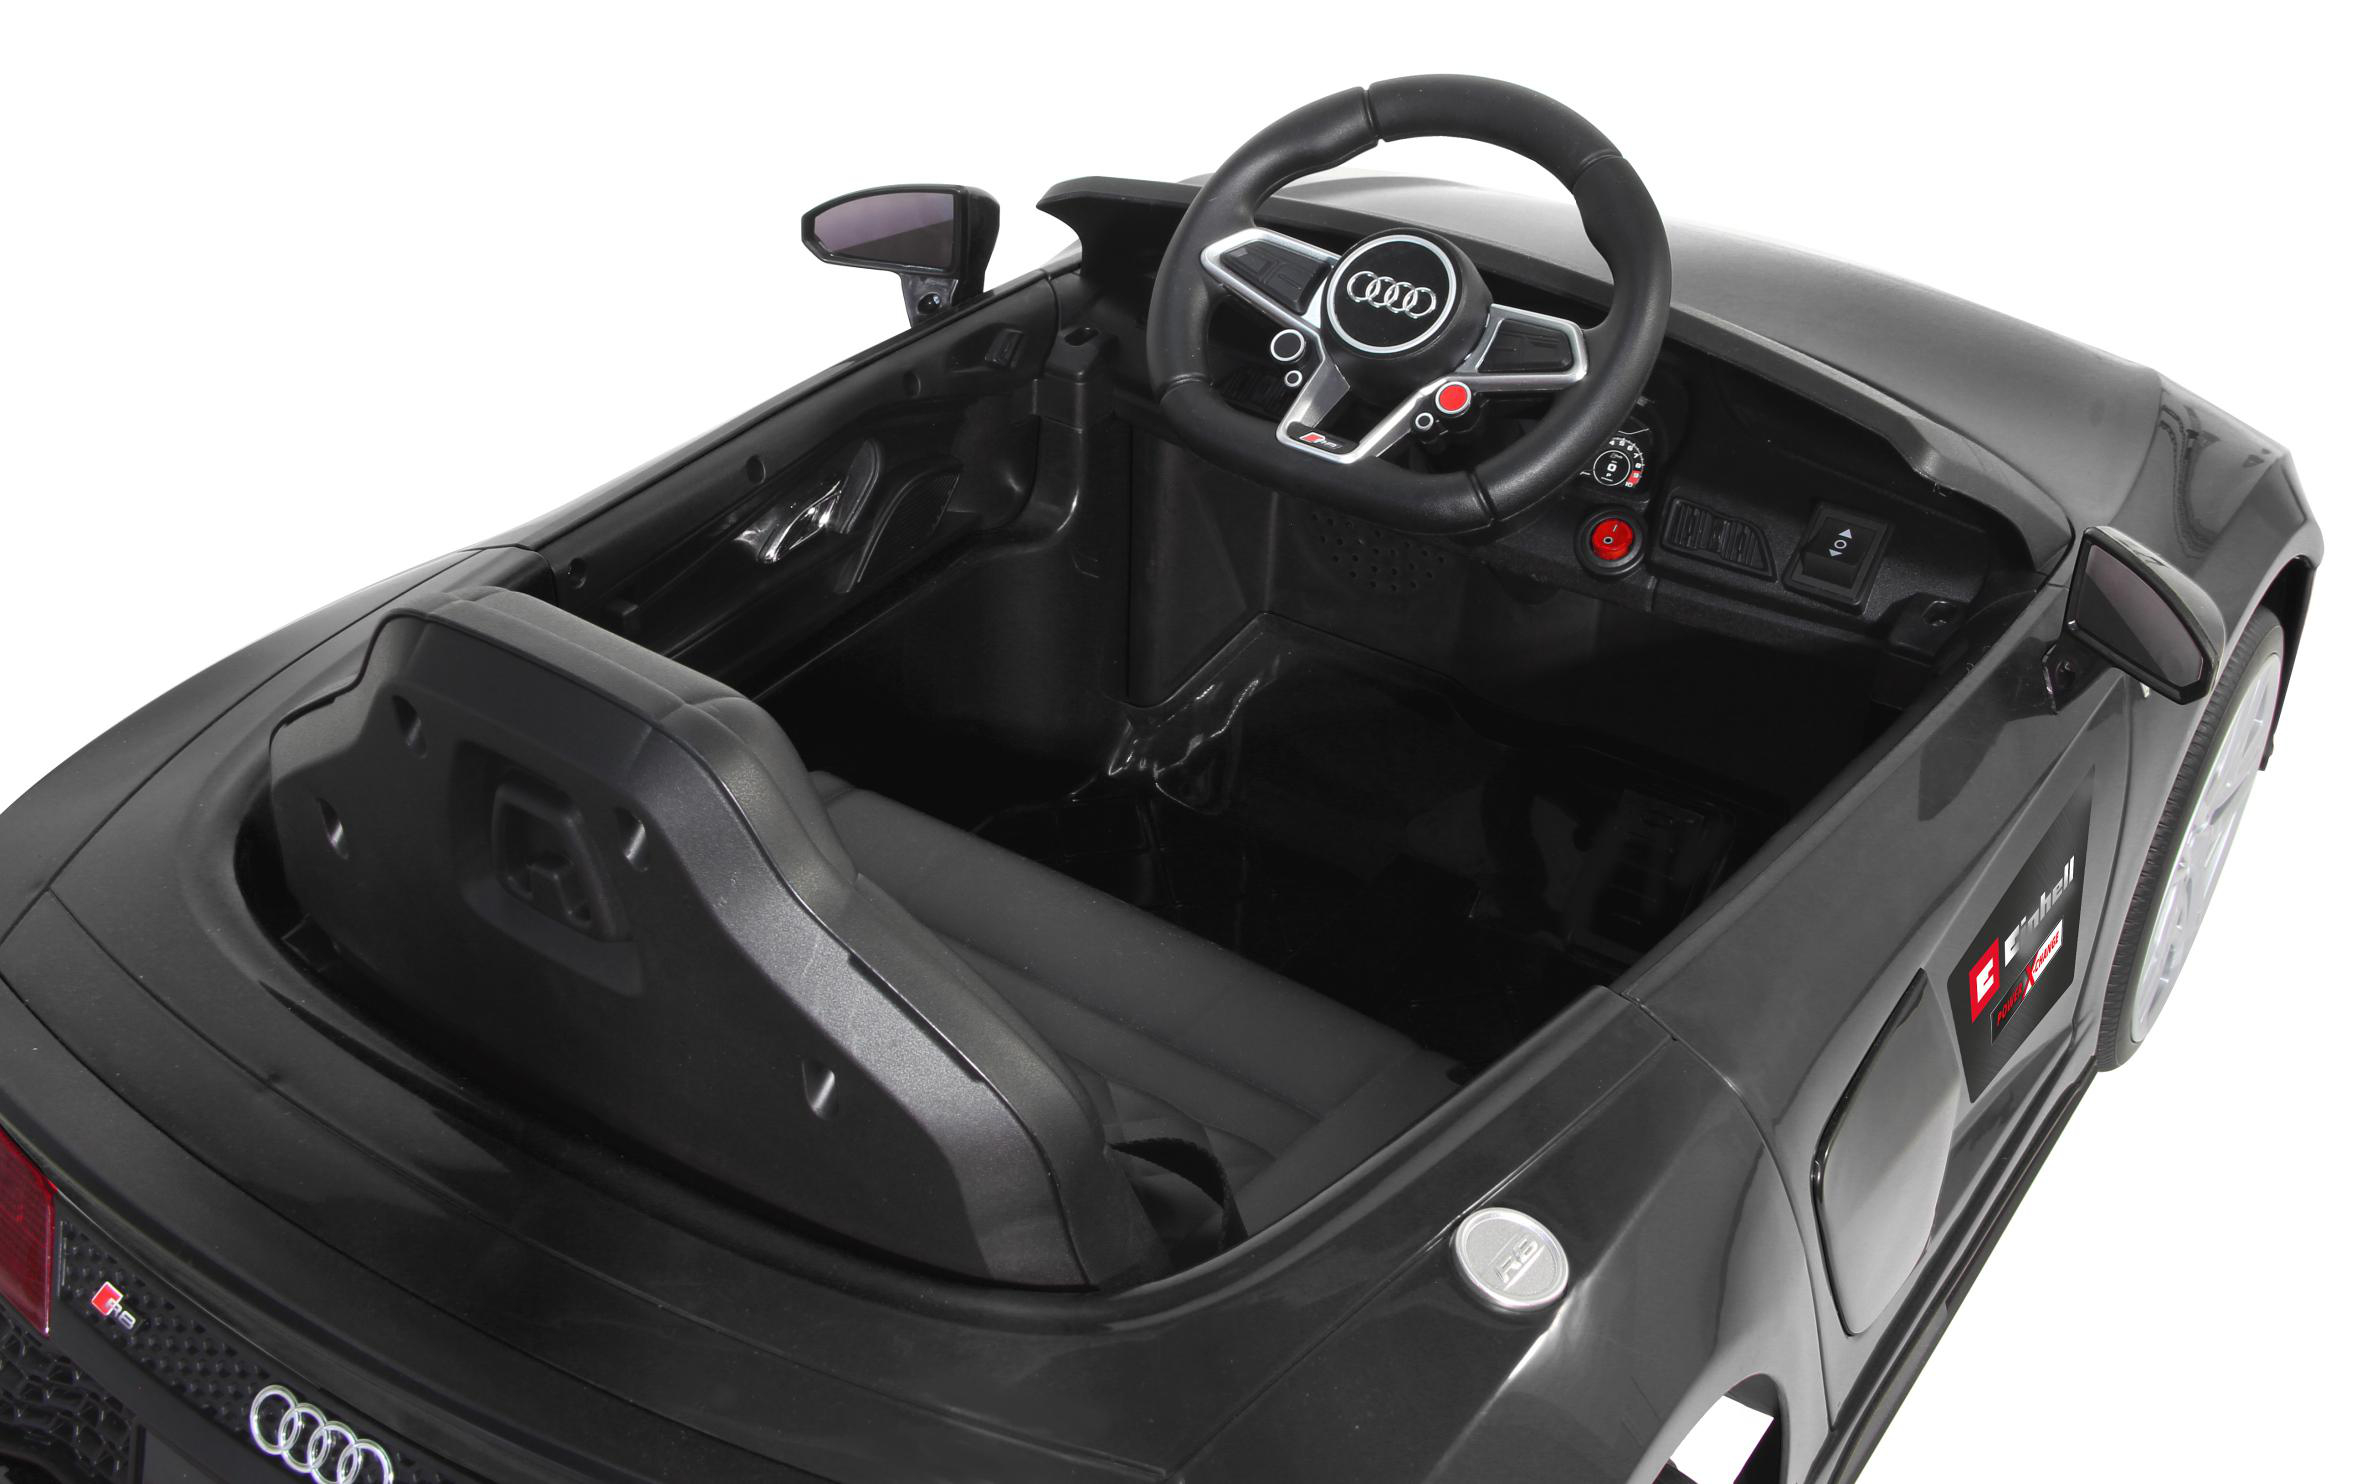 inkl. Audi JAMARA X-Change Ride-on Power KIDS Einhell Spyder Set Schwarz 18V Starter Elektrofahrzeug R8 schwarz